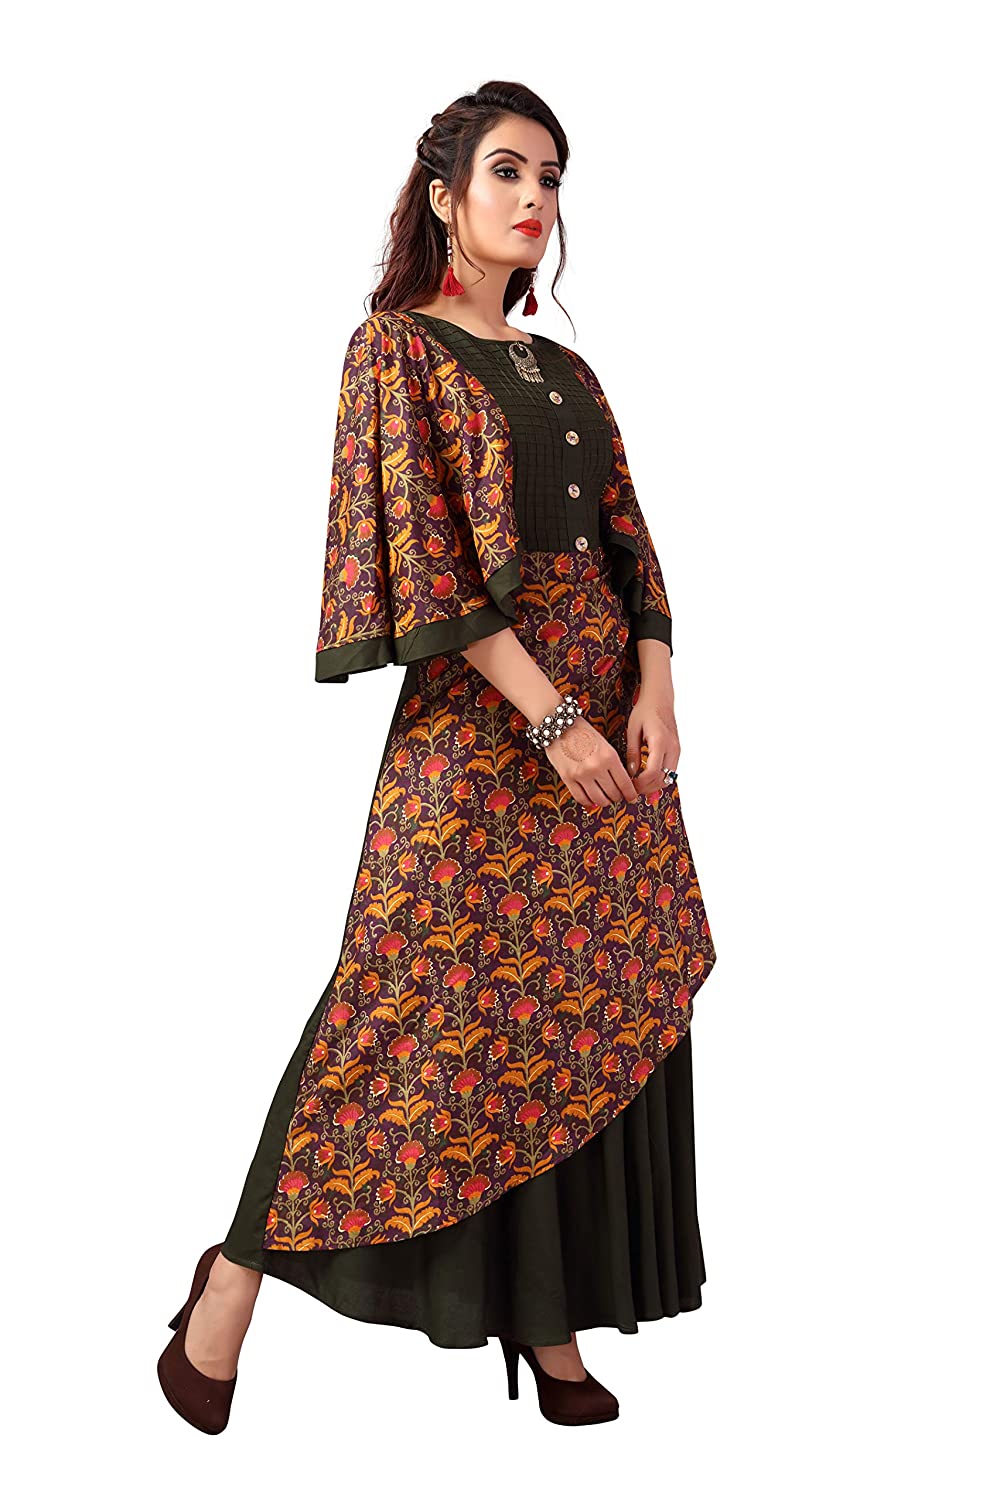 Madhuram textiles Women's Rayon with 3/4 Sleeve Anarkali Long Kurti -  Kurtas & Kurtis in Sri Lanka from Arcade Online Shopping - Just Rs. 6899!